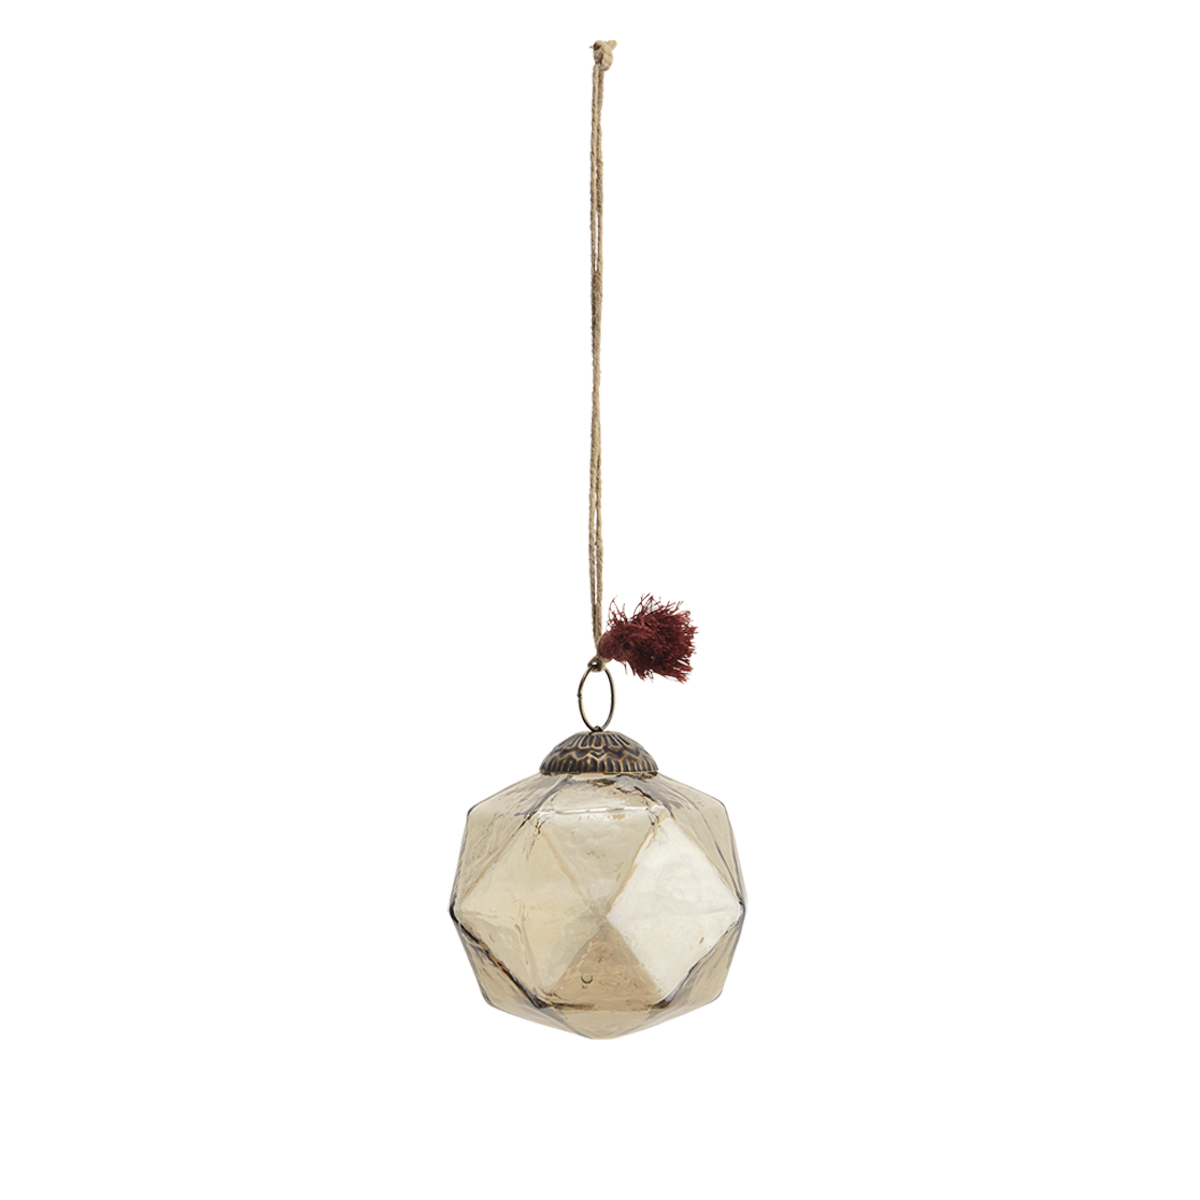 Hanging glass ornament